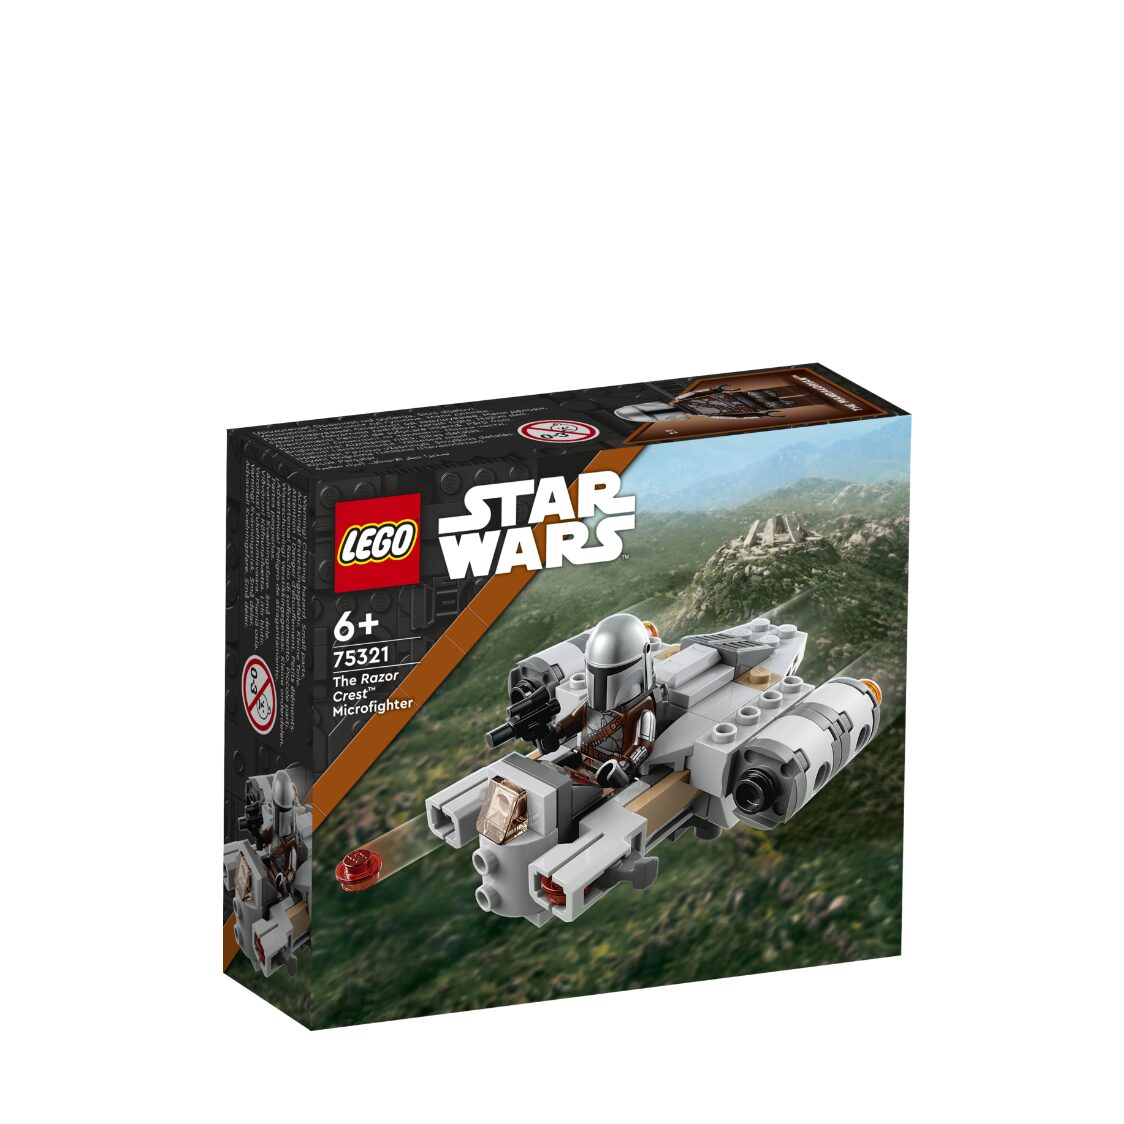 LEGO 75321 Star Wars TM The Razor Crest Microfighter